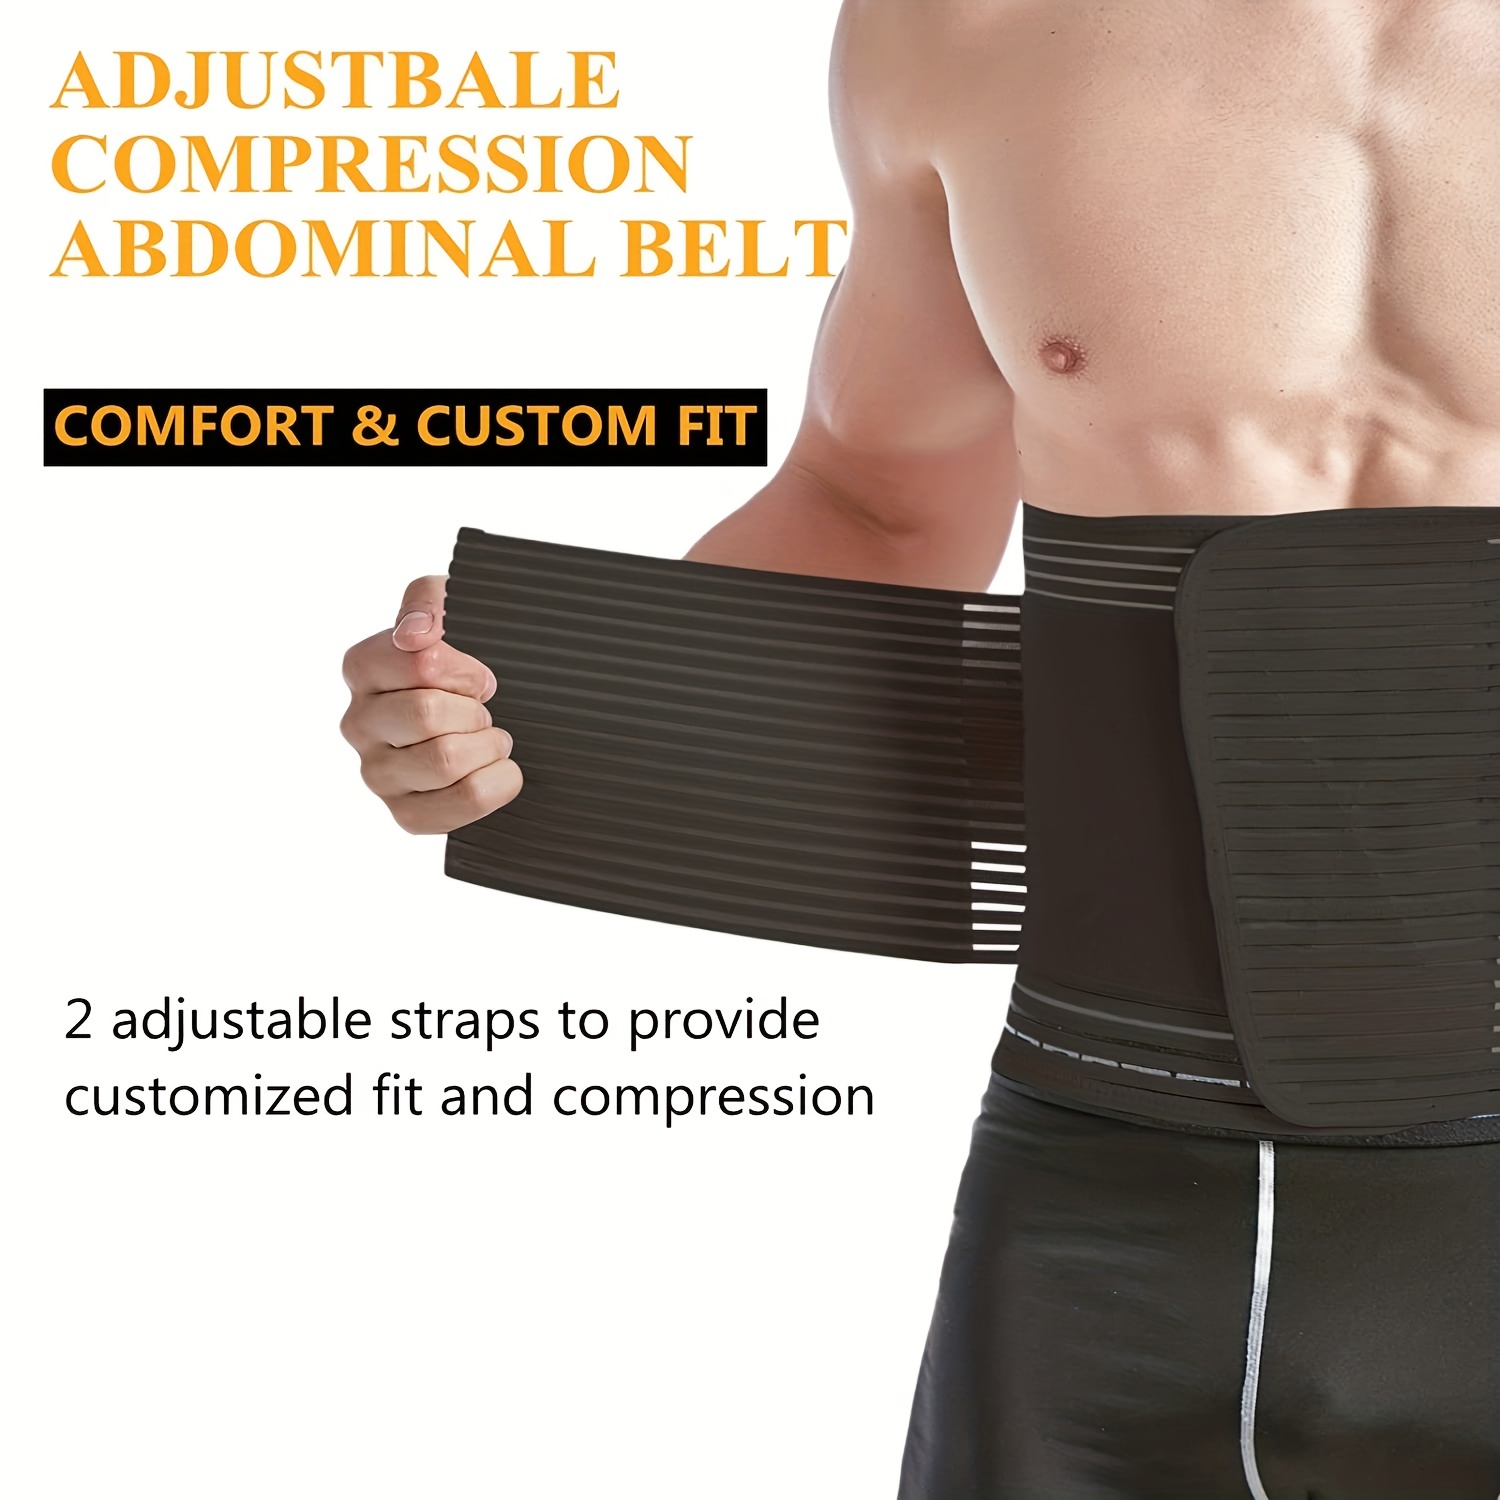 Hernia Belts for Men Abdominal Support Surgical Belly Binder